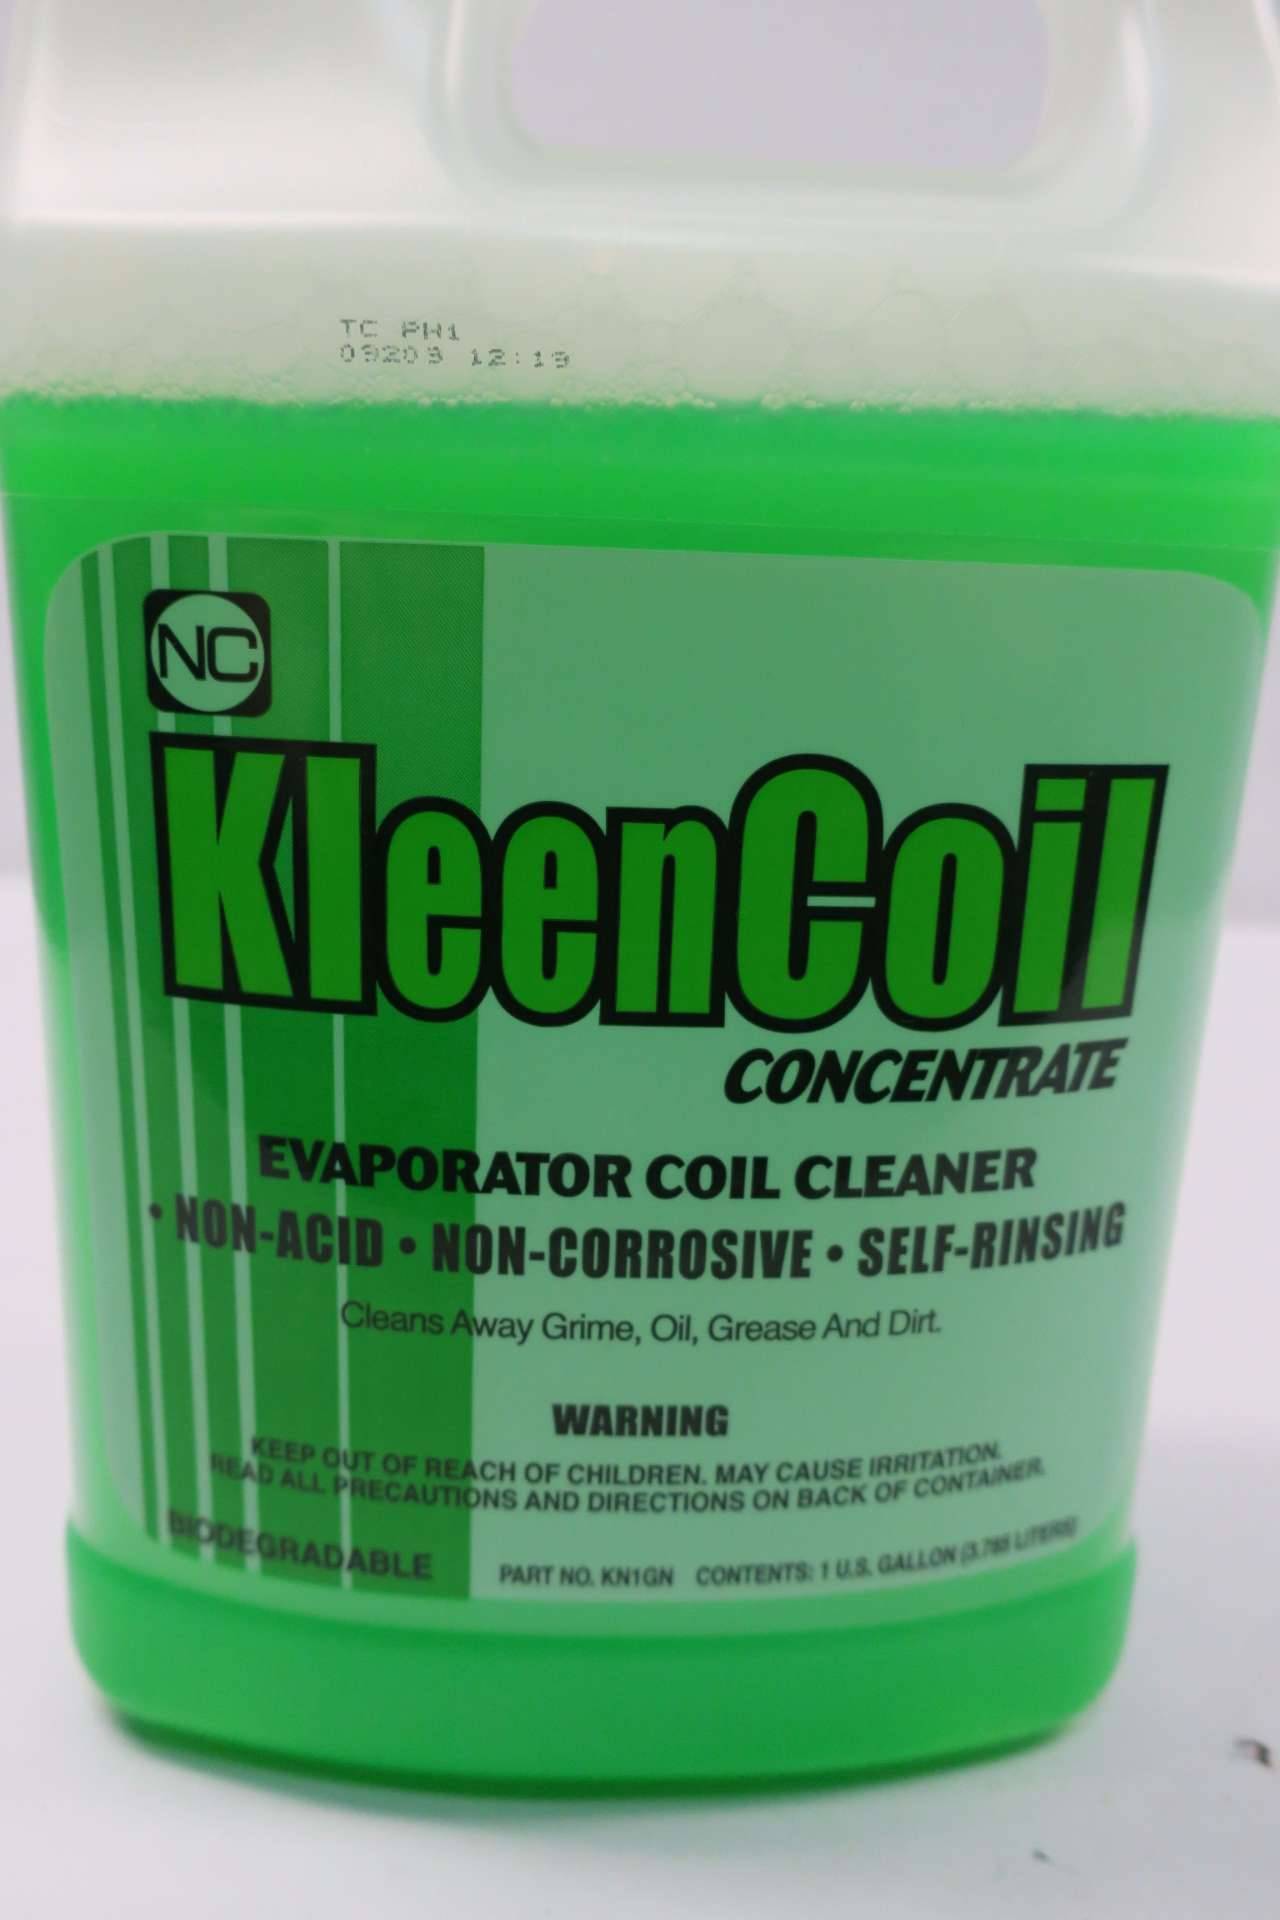 Shop KLEENCOIL1 - Kleen Coil - National Chemicals - URI